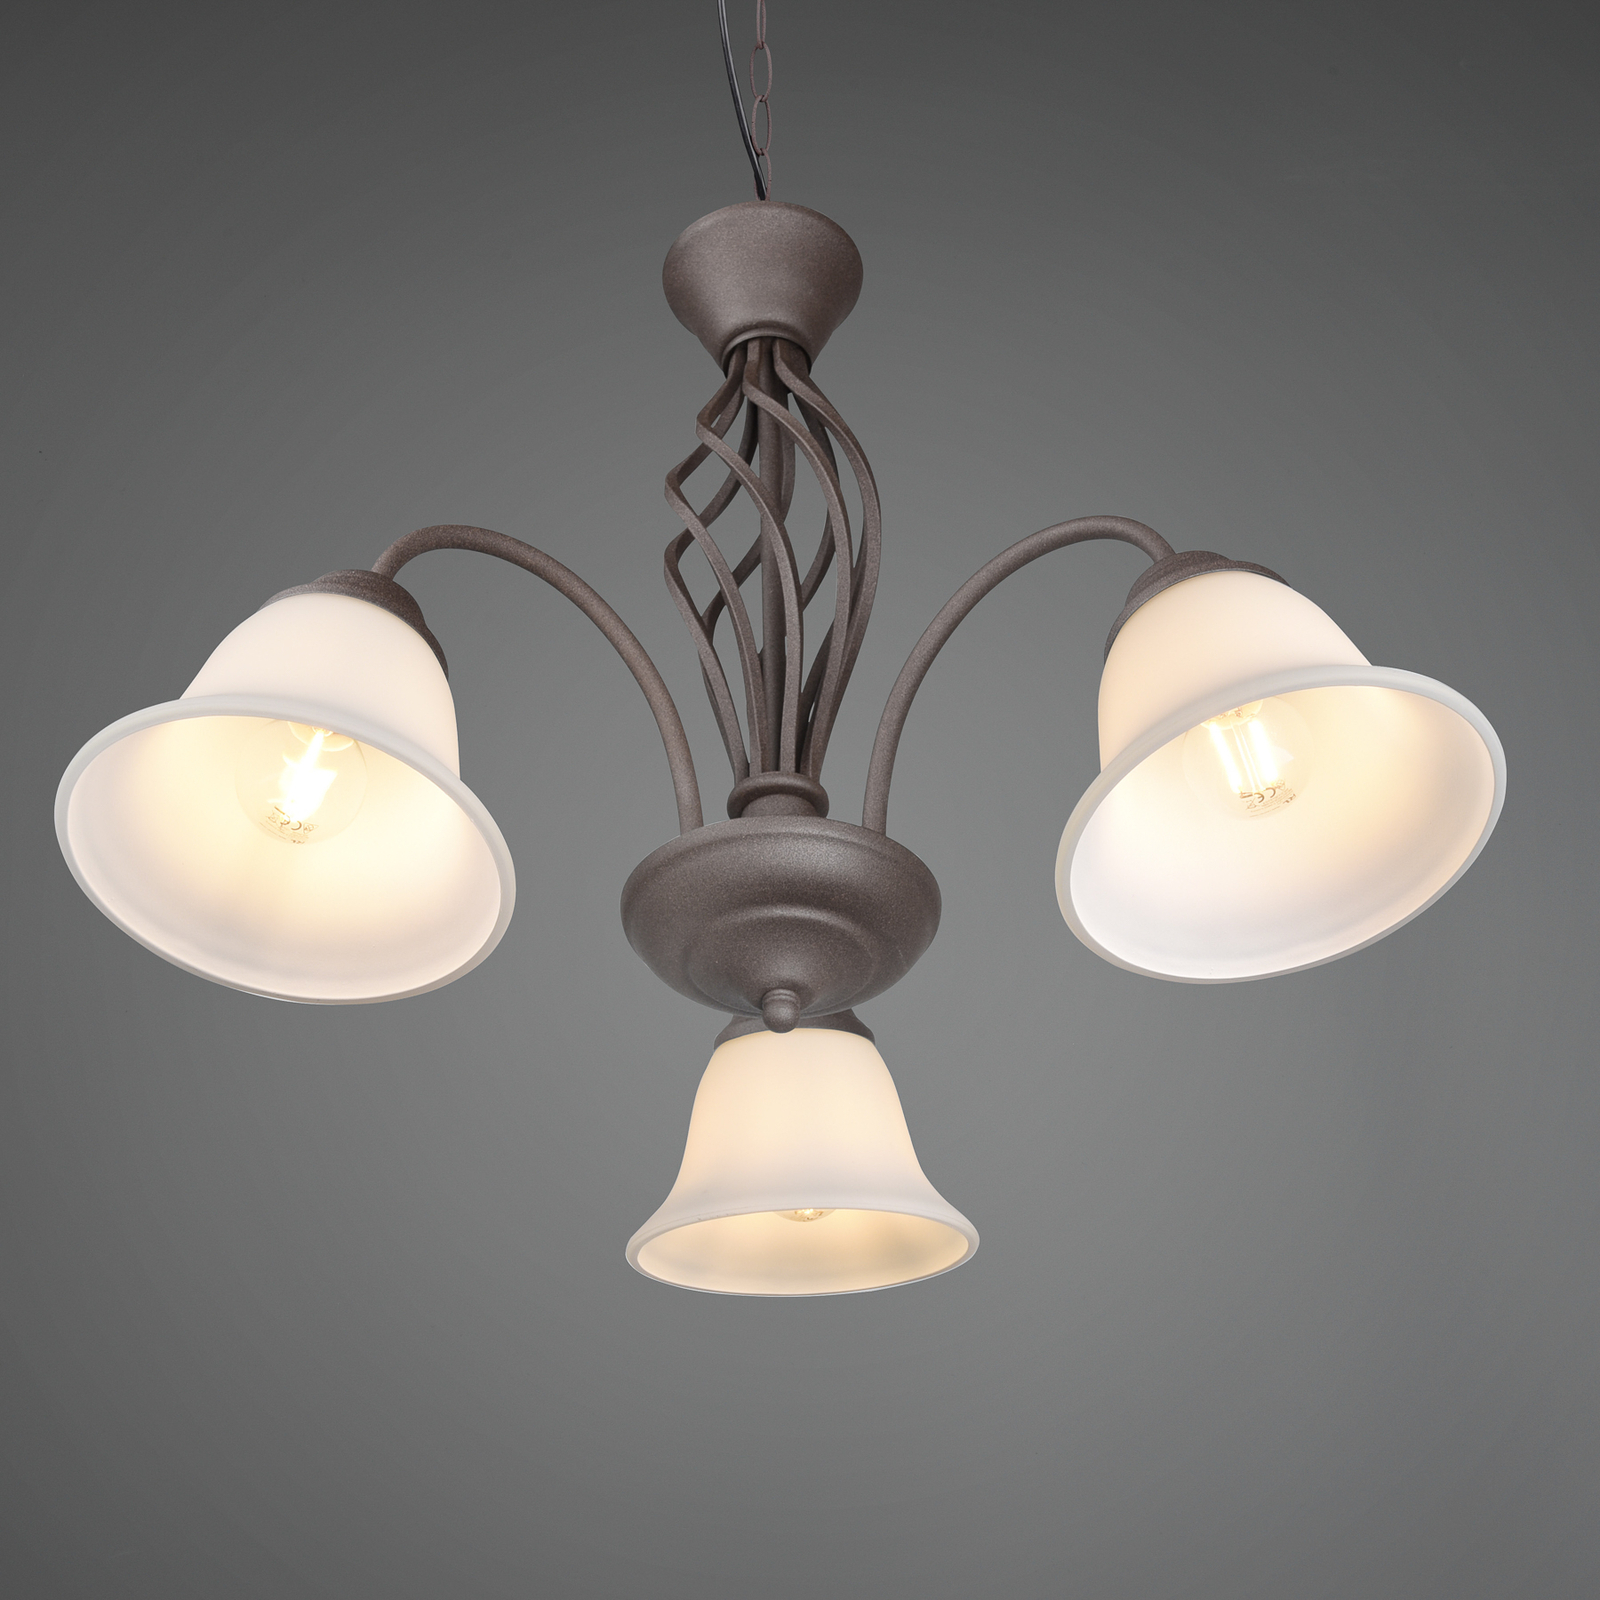 Rustica hængelampe, rustfarvet, 3 lyskilder